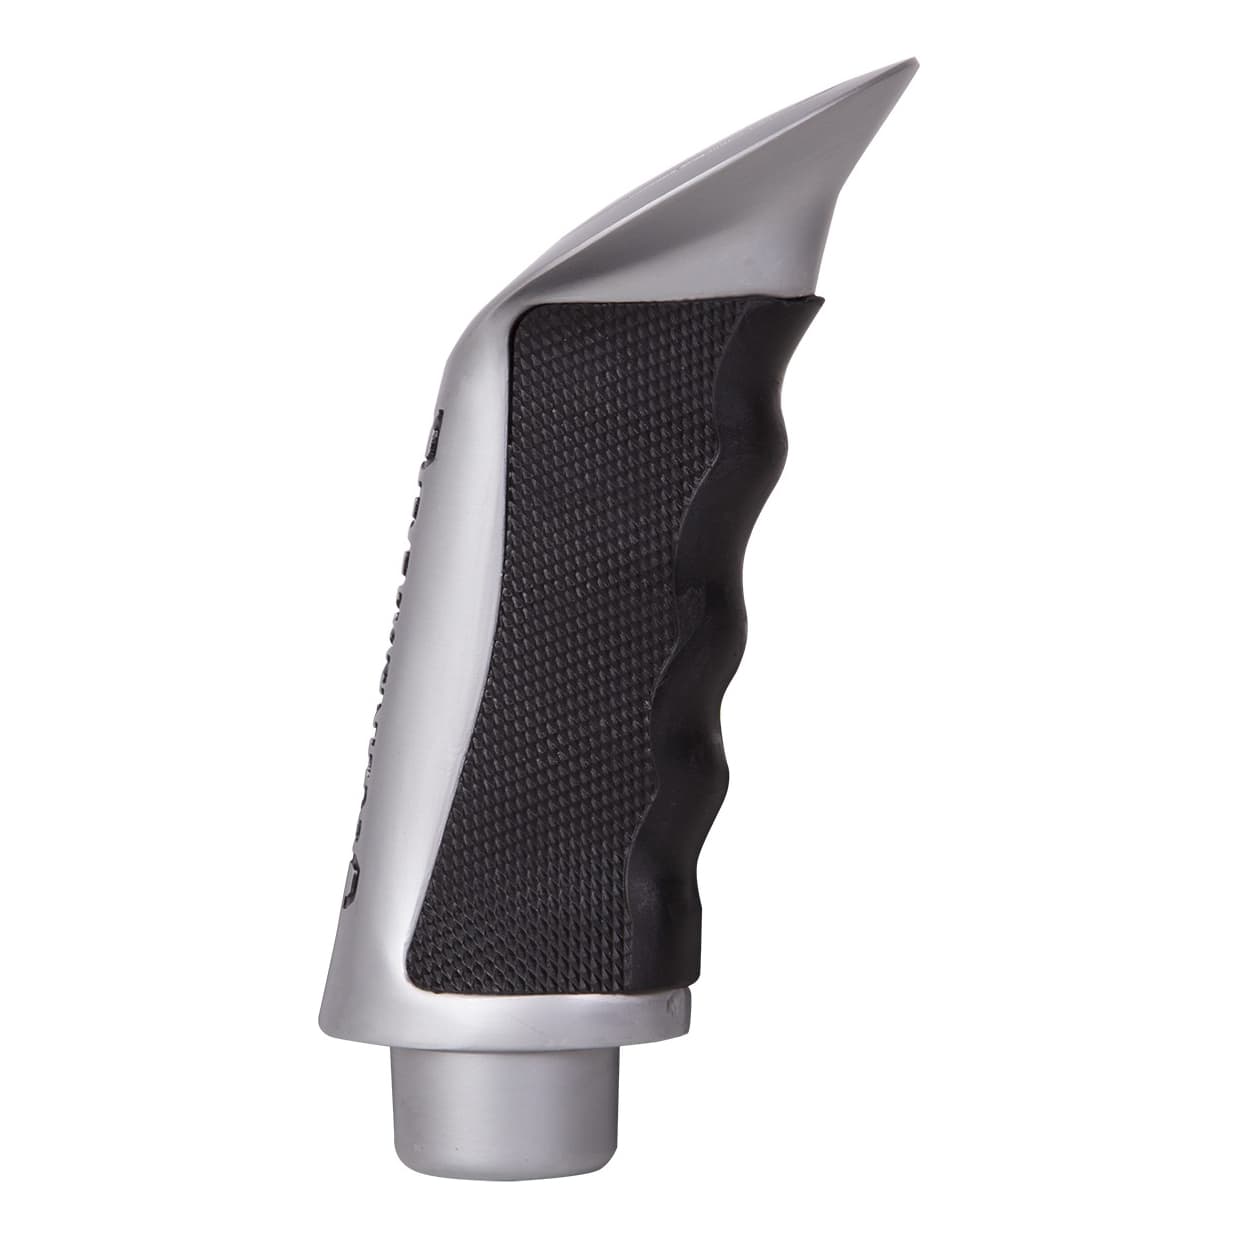 Browning® Pistol Grip Gear Shift Knob - Side View